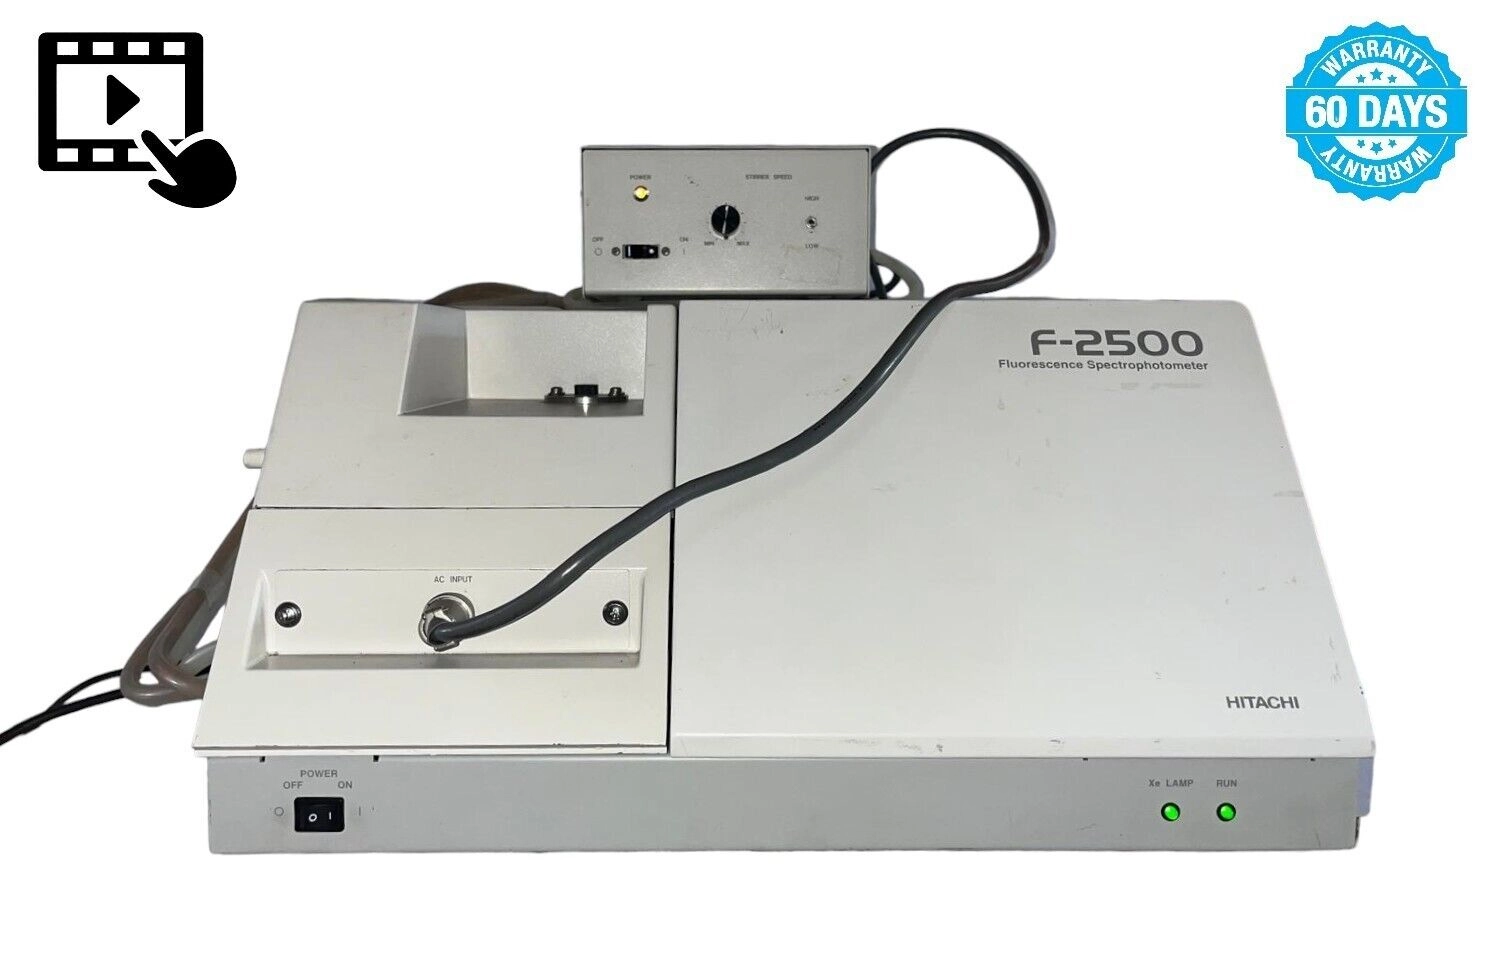 Hitachi F-2500 Fluorescence Spectrophotometer 